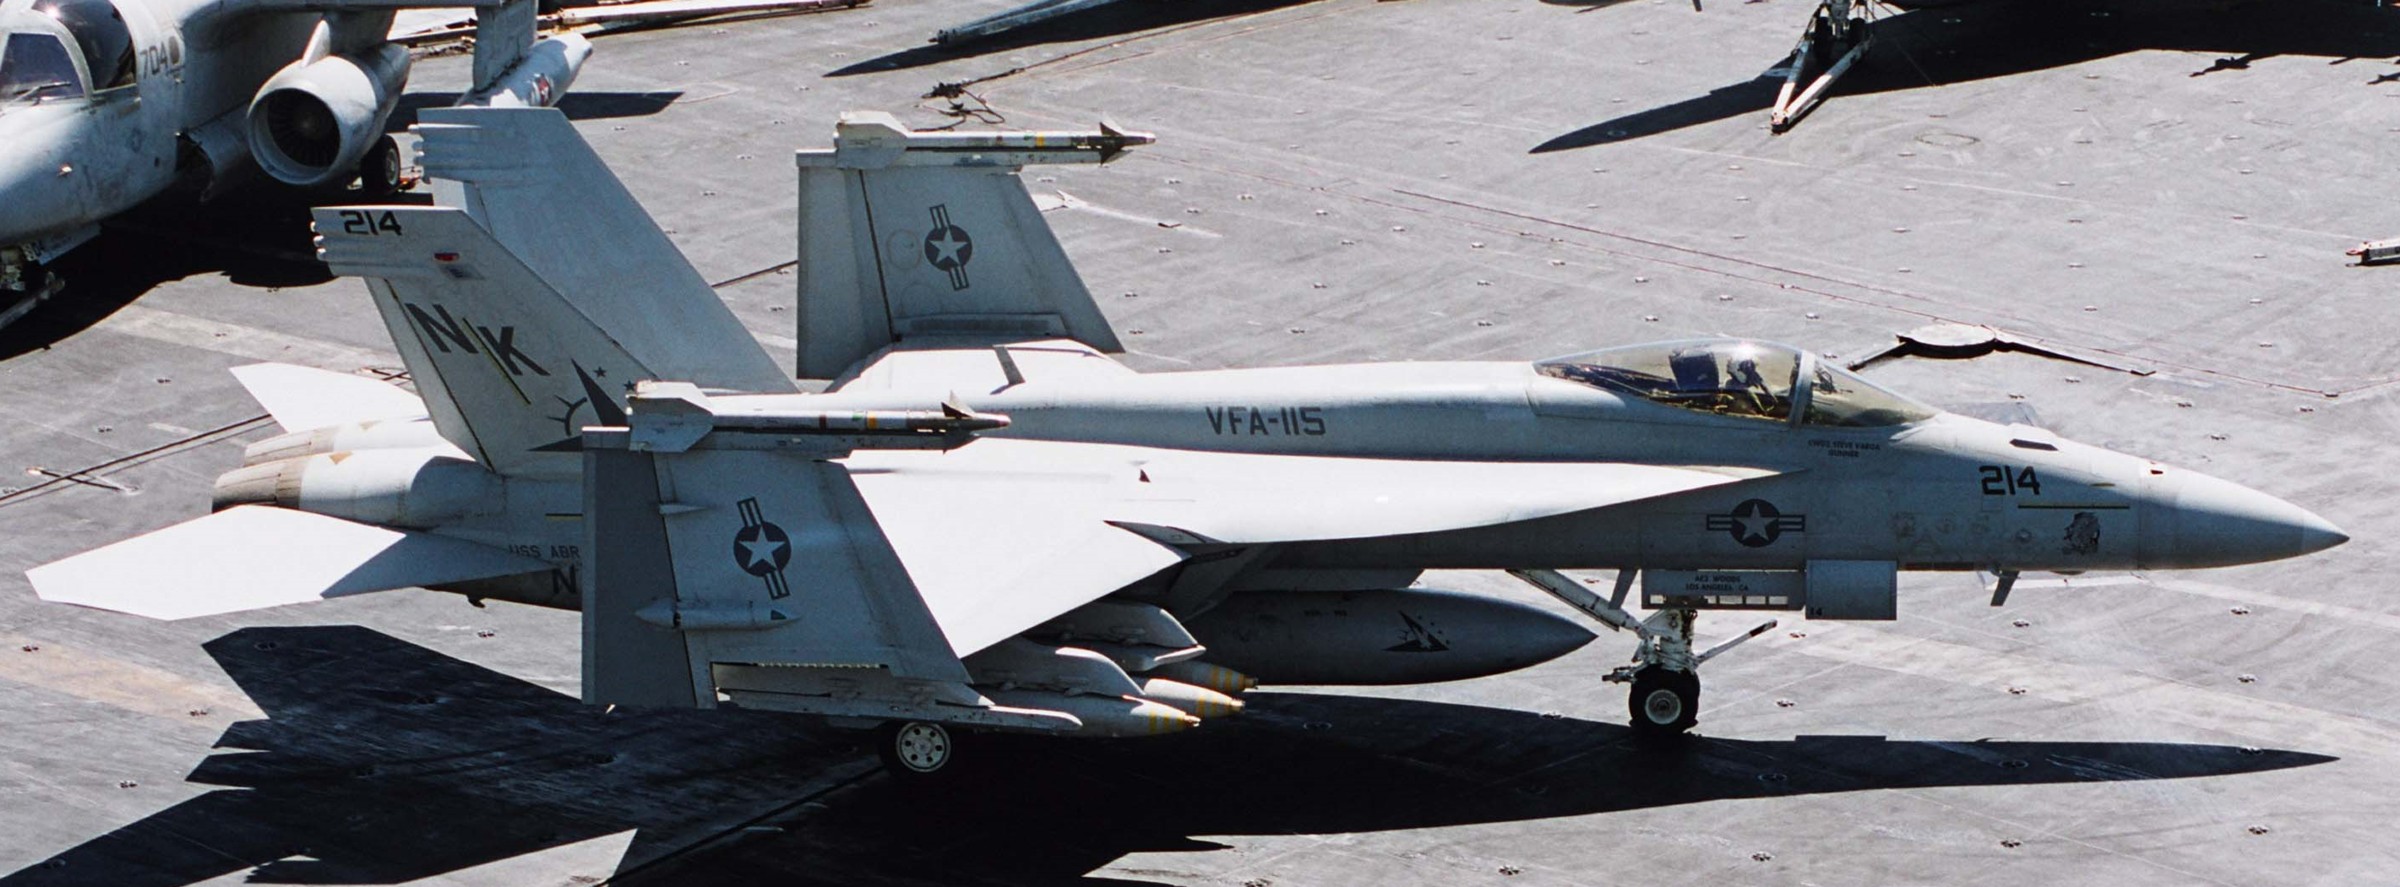 vfa-115 eagles strike fighter squadron f/a-18e super hornet cvw-14 uss abraham lincoln cvn-72 2003 58